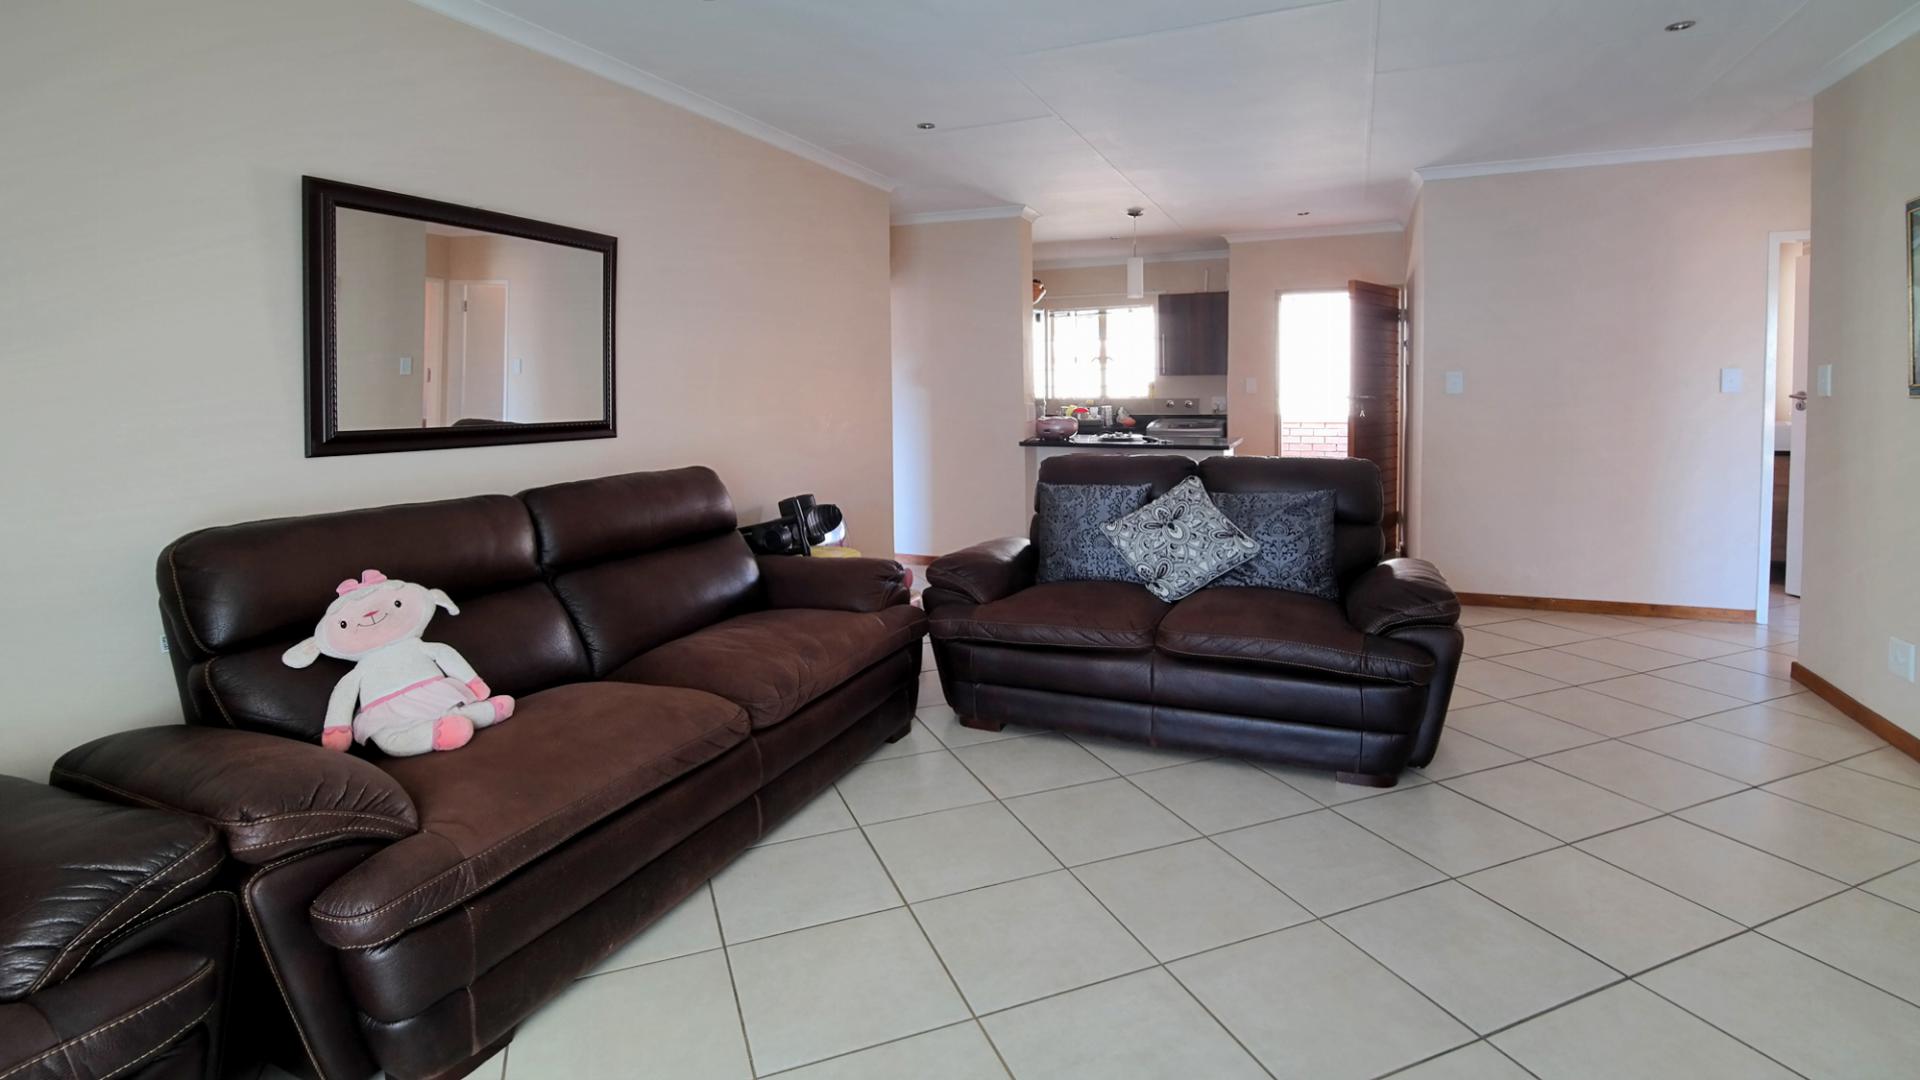 Lounges - 24 square meters of property in Mooikloof Ridge